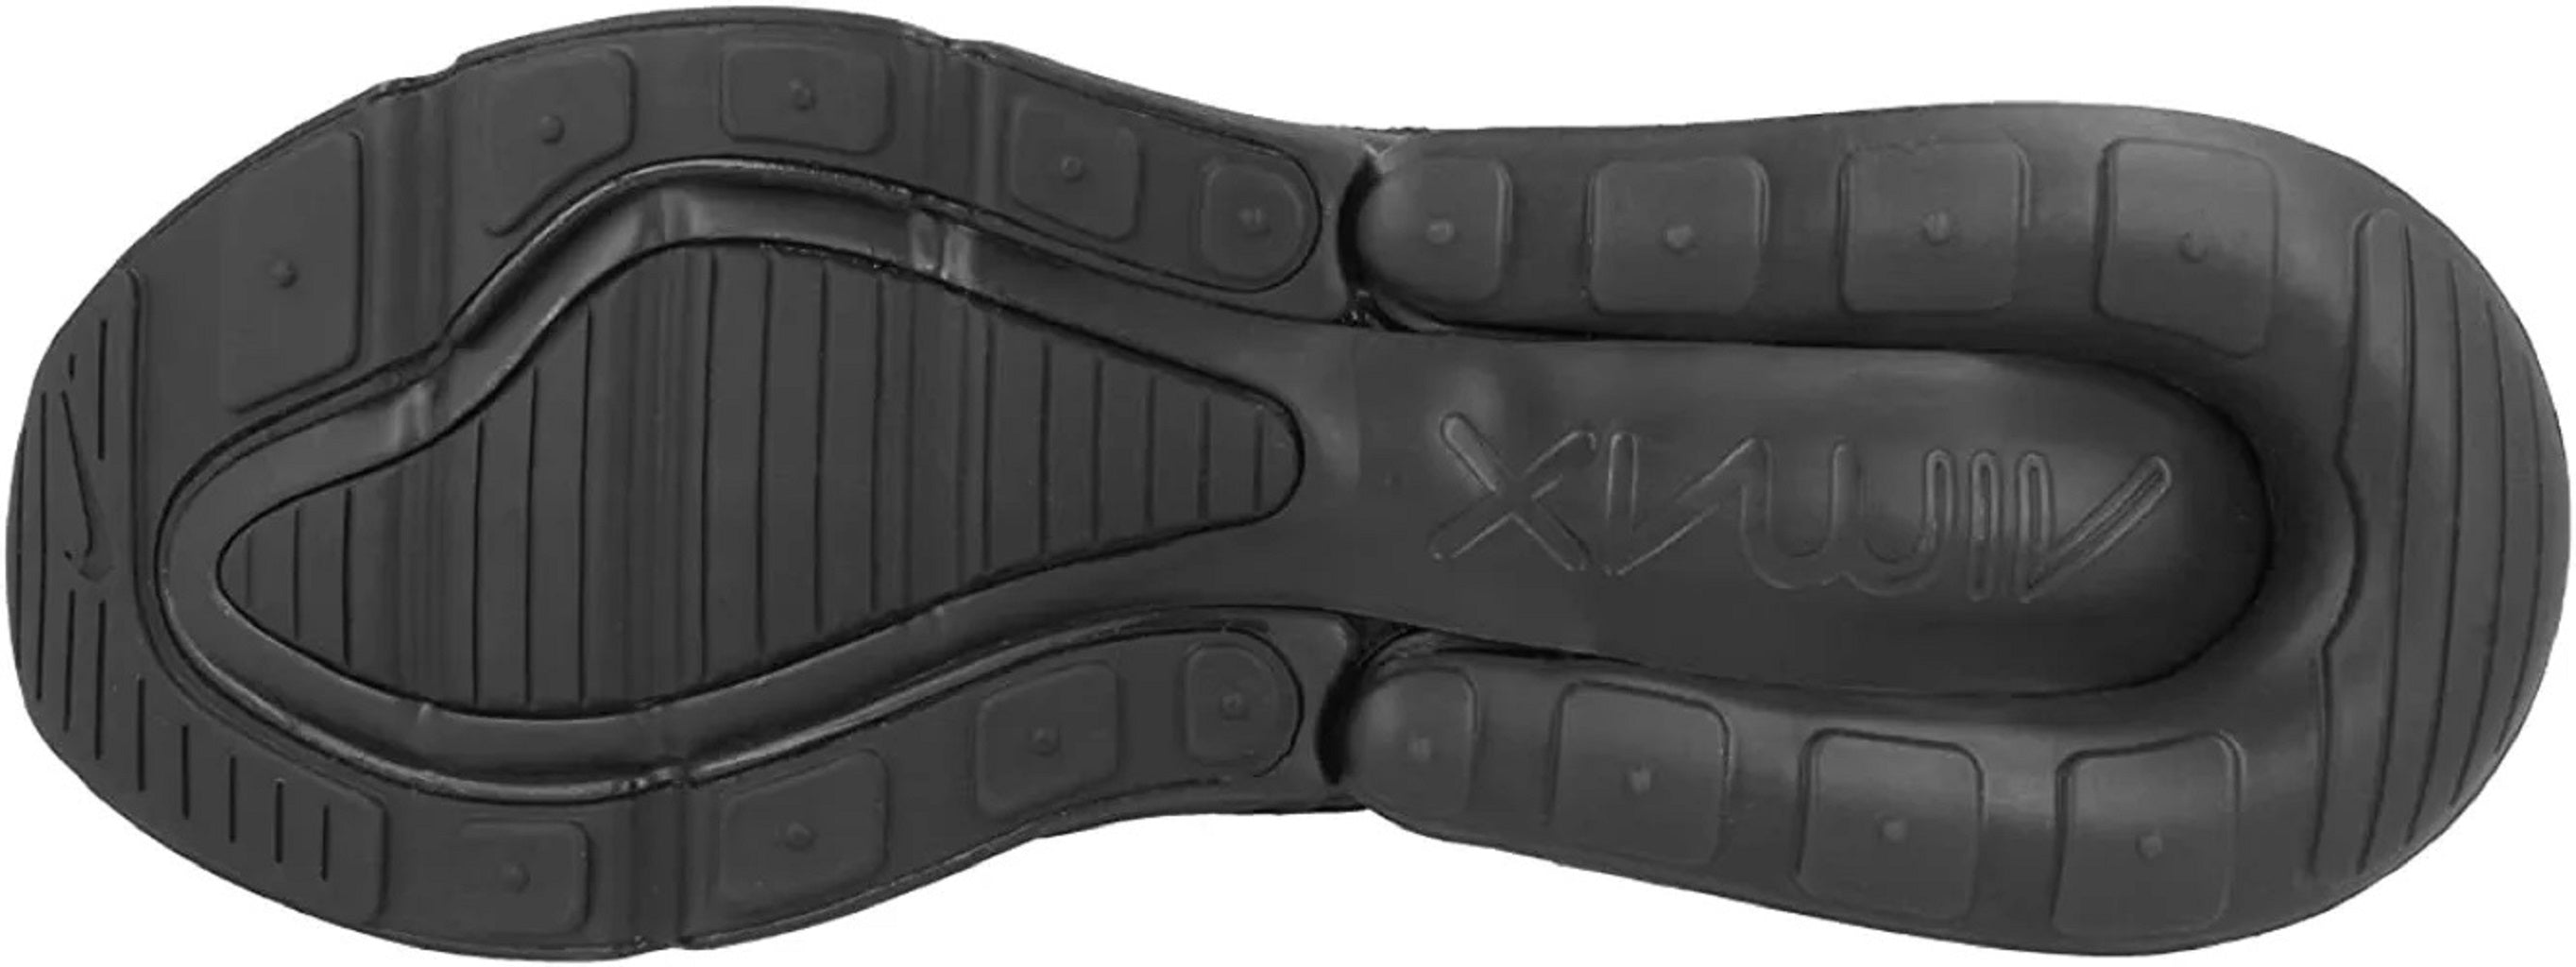 Nike Mens Air Max 270 Lifestyle Running Shoes,Black Black Black Black